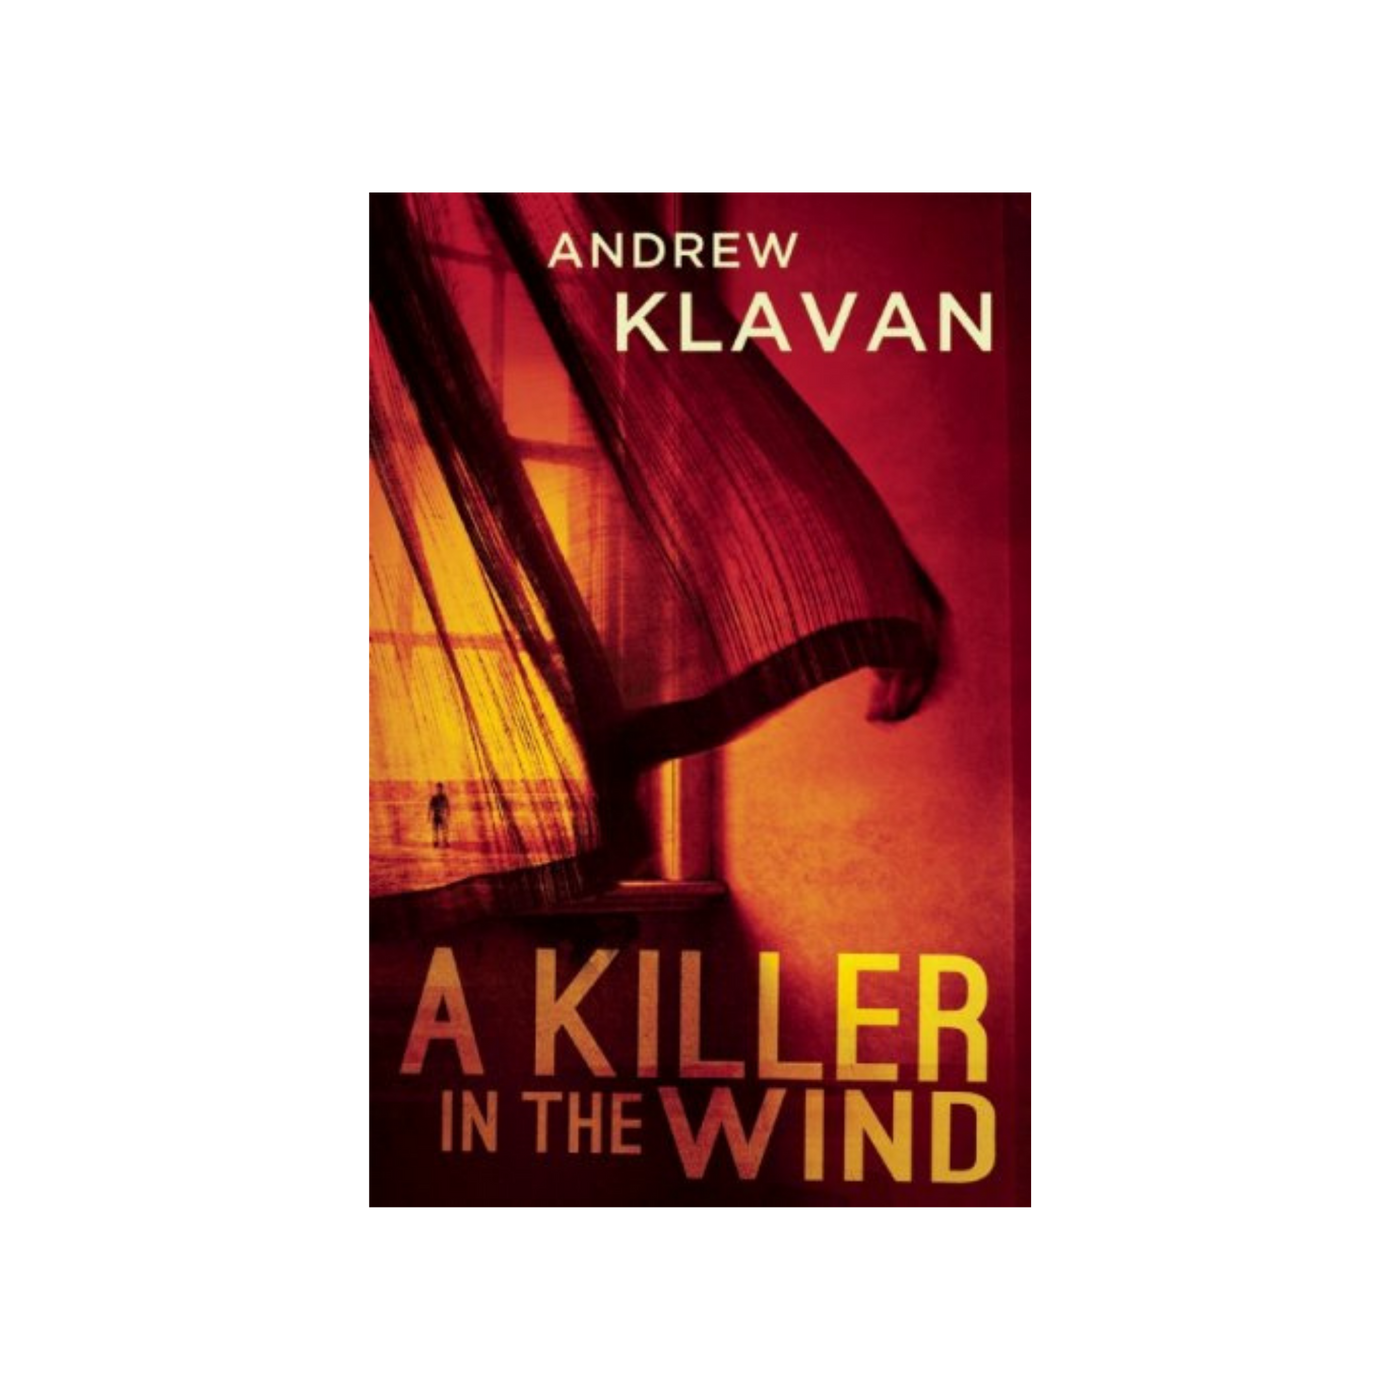 A Killer in the Wind by Andrew Klavan